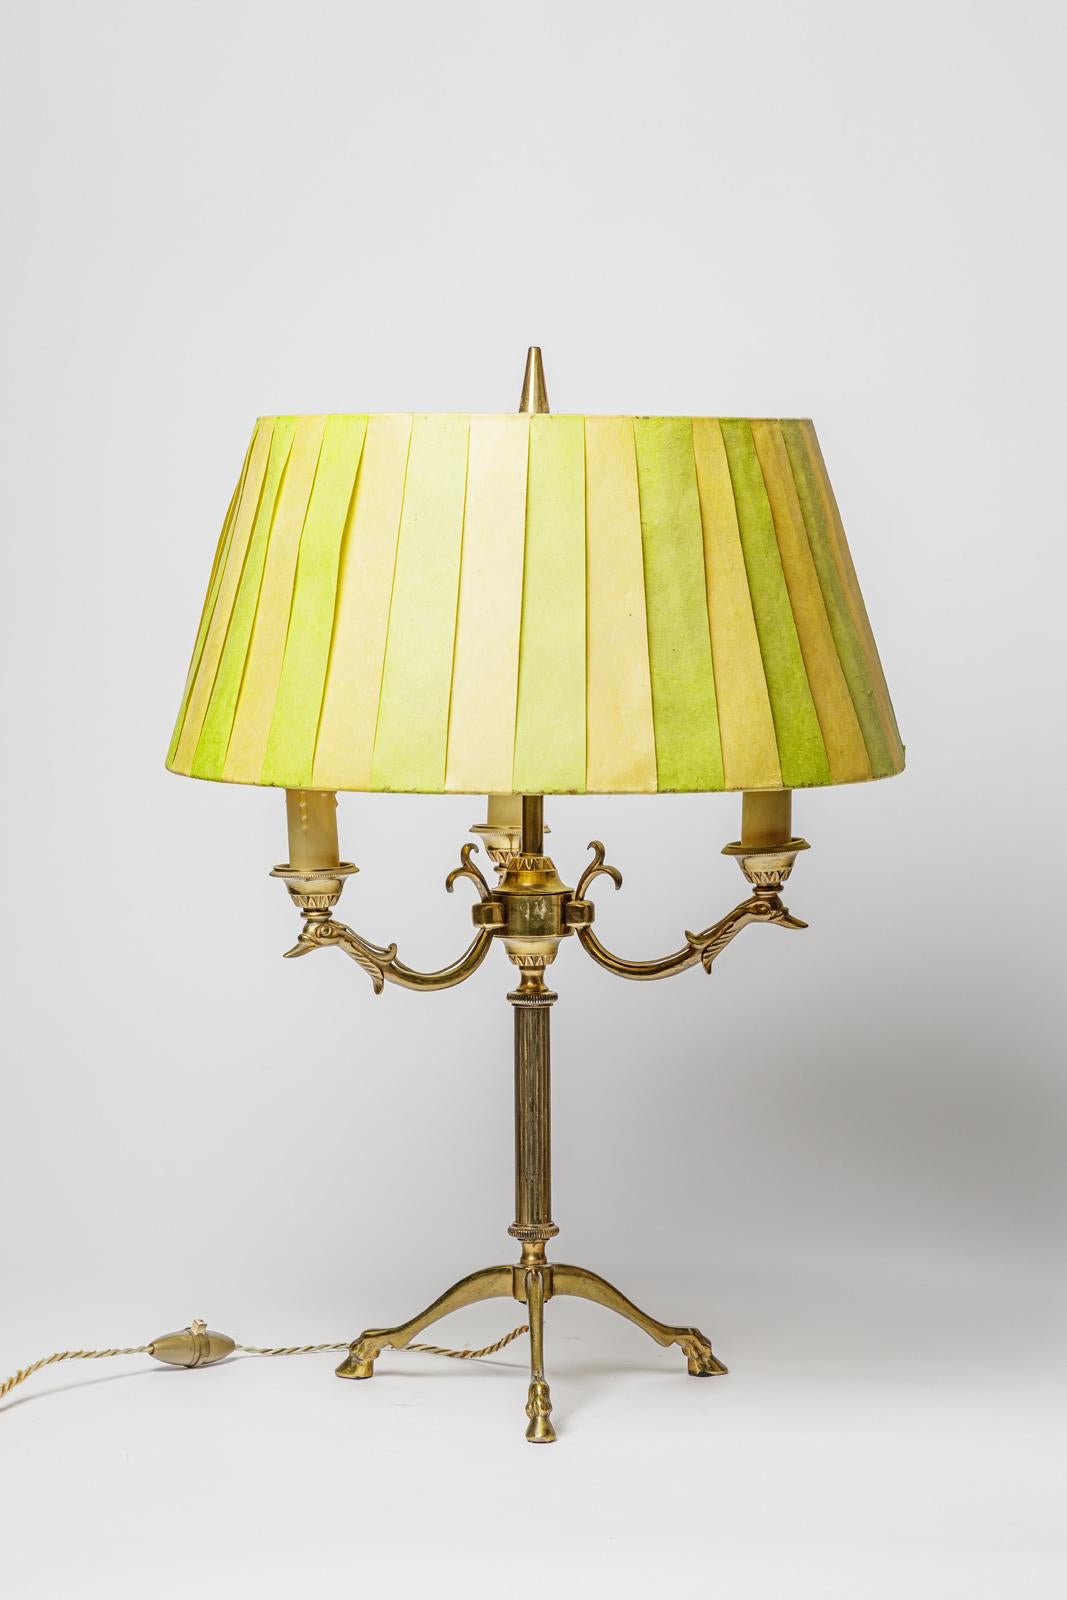 Mid-Century Modern 20th century design golden brass animals table lamp by Maison Jansen 1970 For Sale